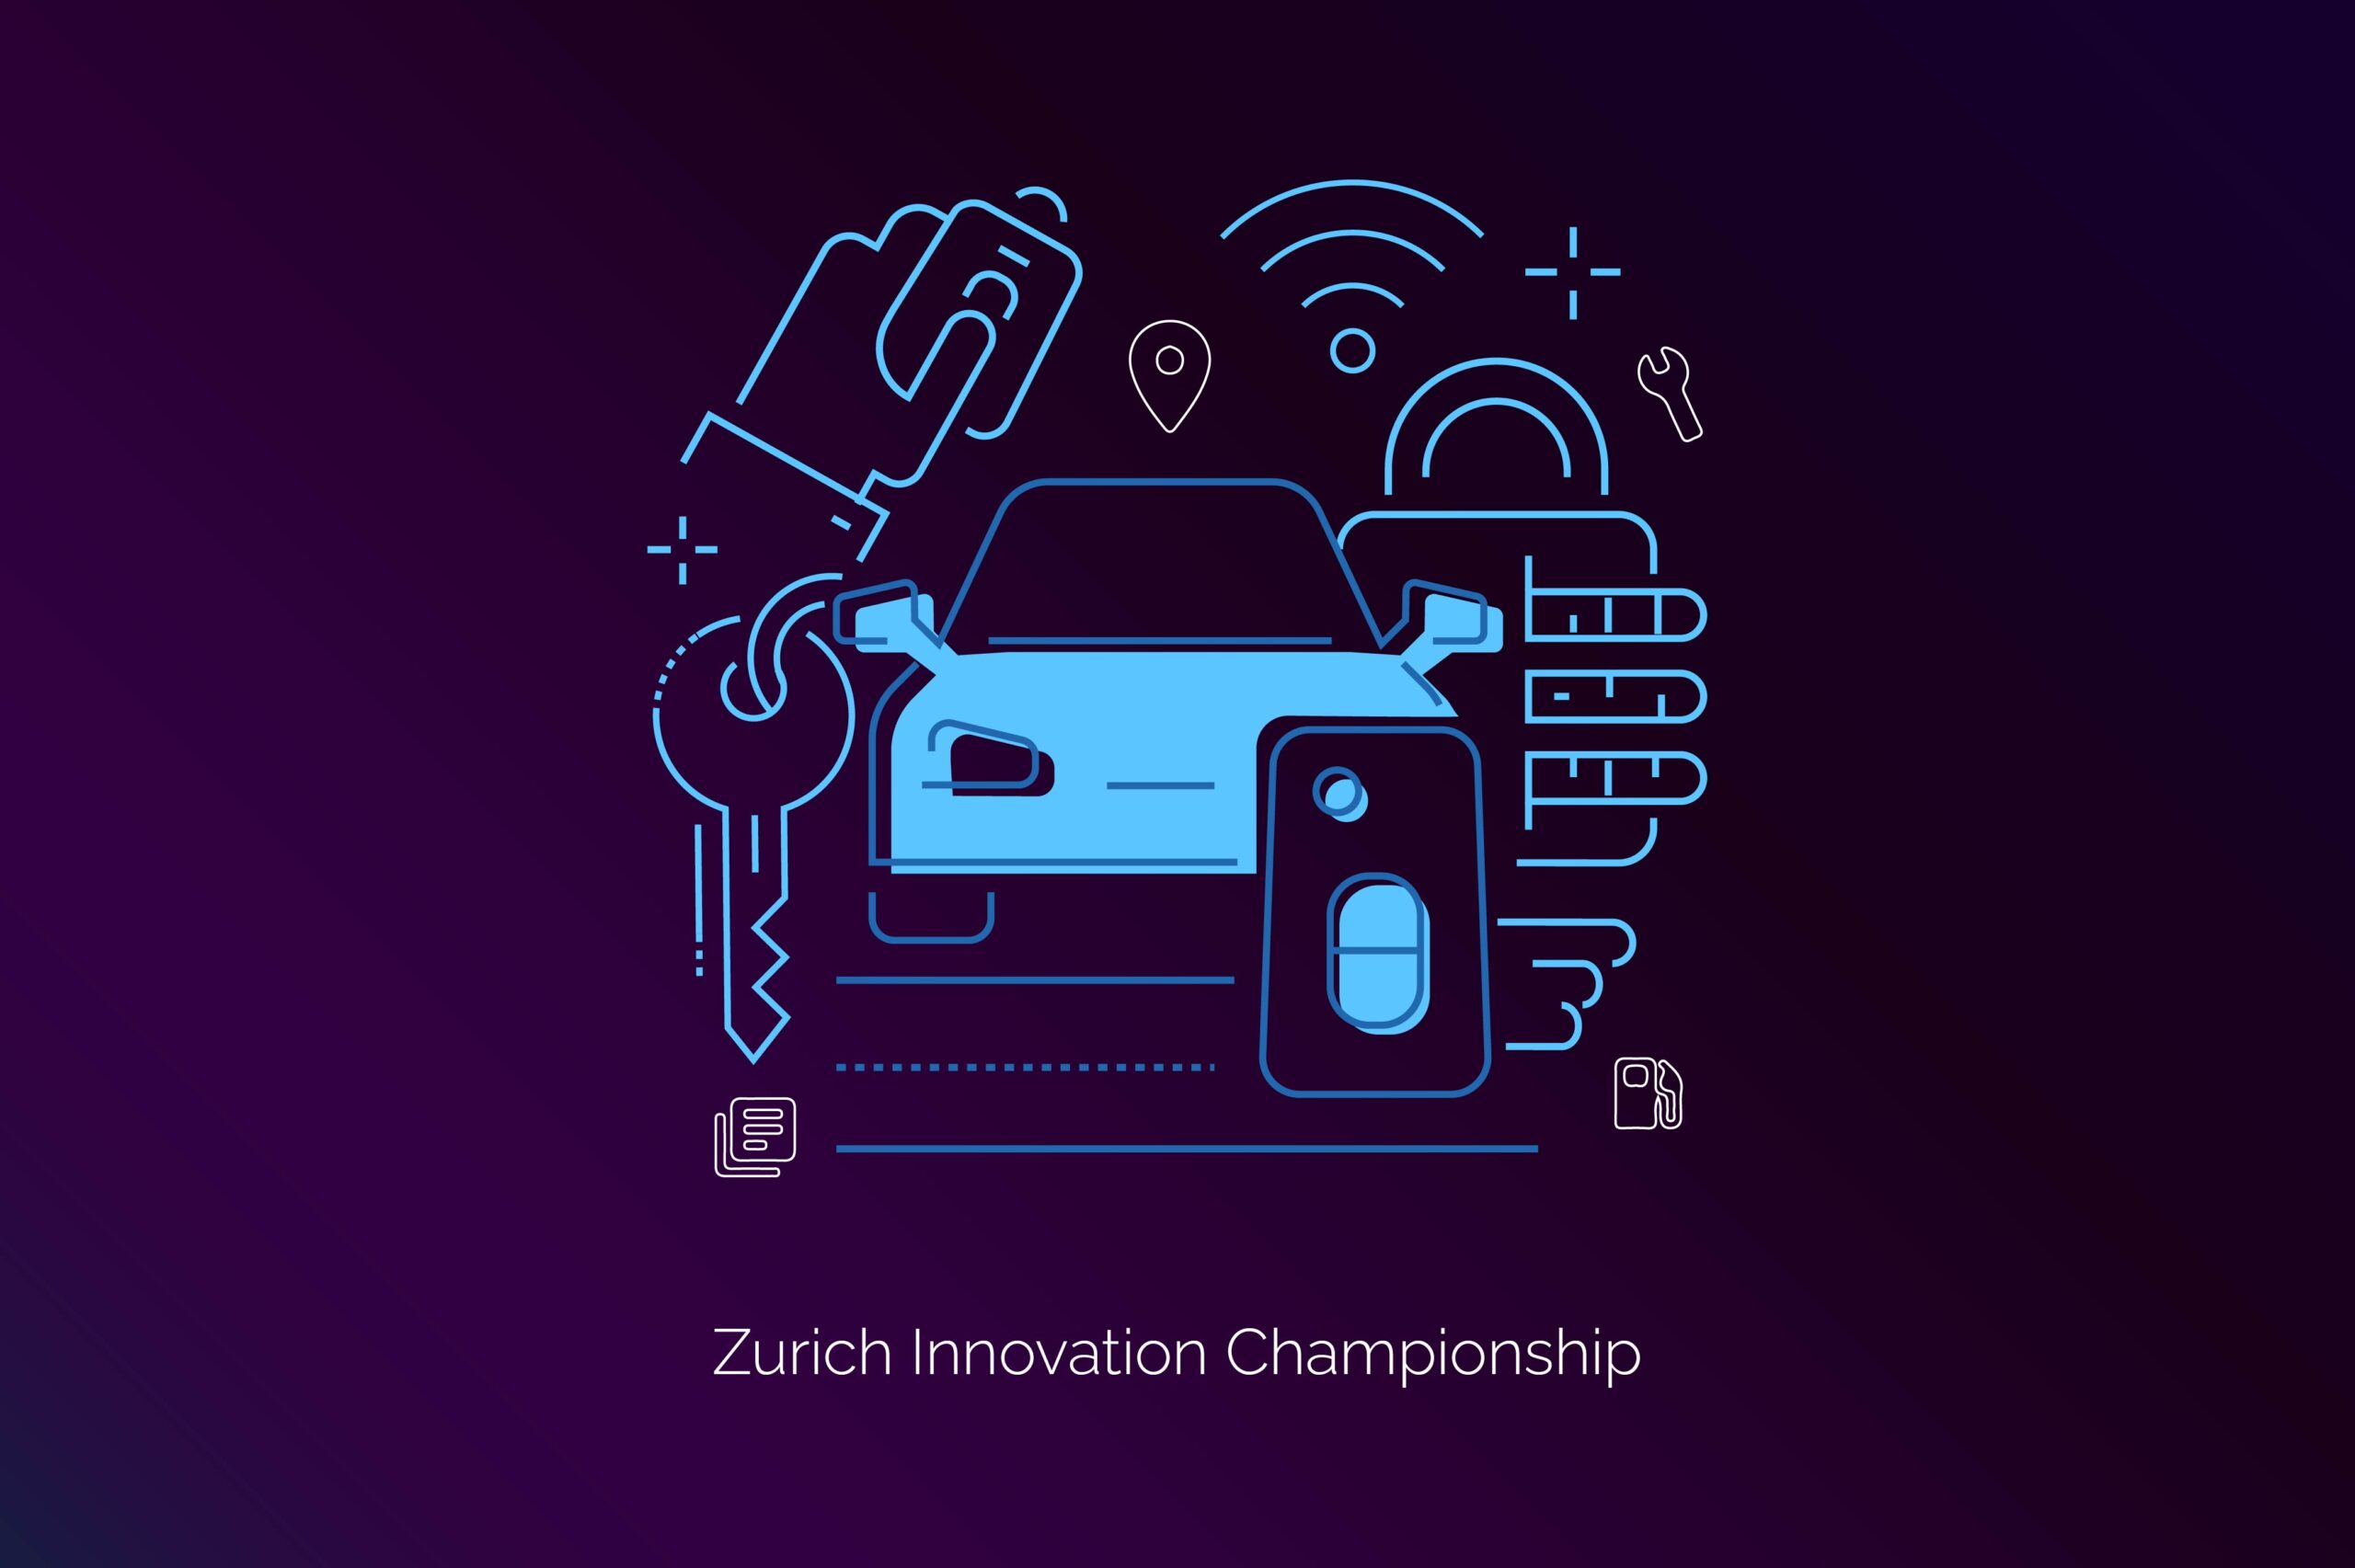 Zurich Innovation Championship